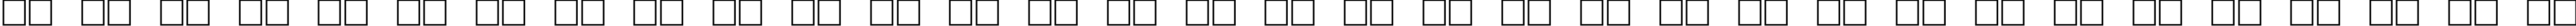 Пример написания русского алфавита шрифтом Warble Normal